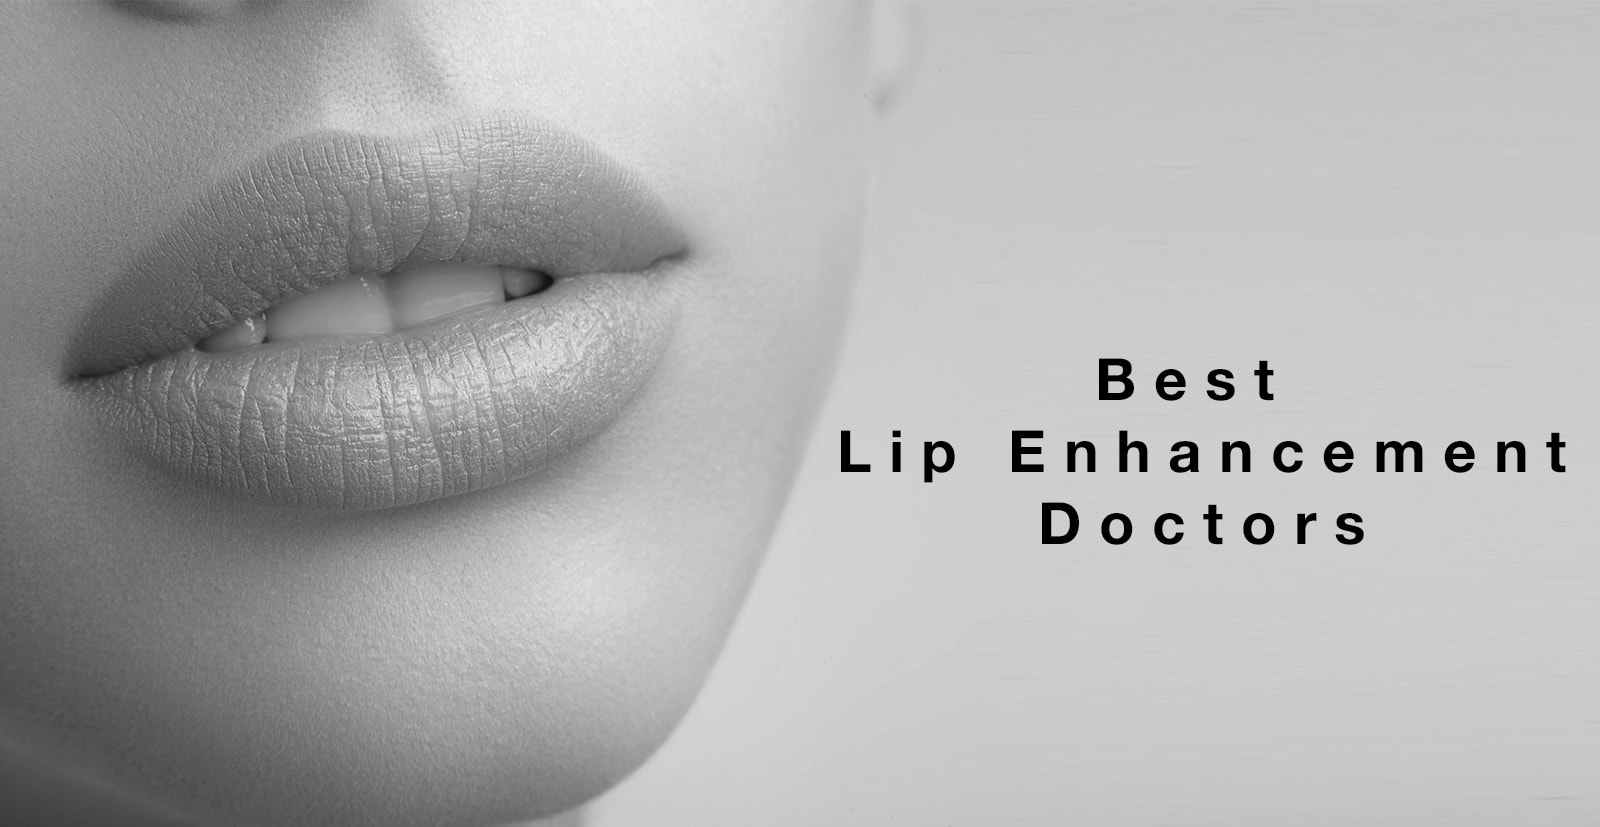 Lip enhancement doctors in greater Los Angeles